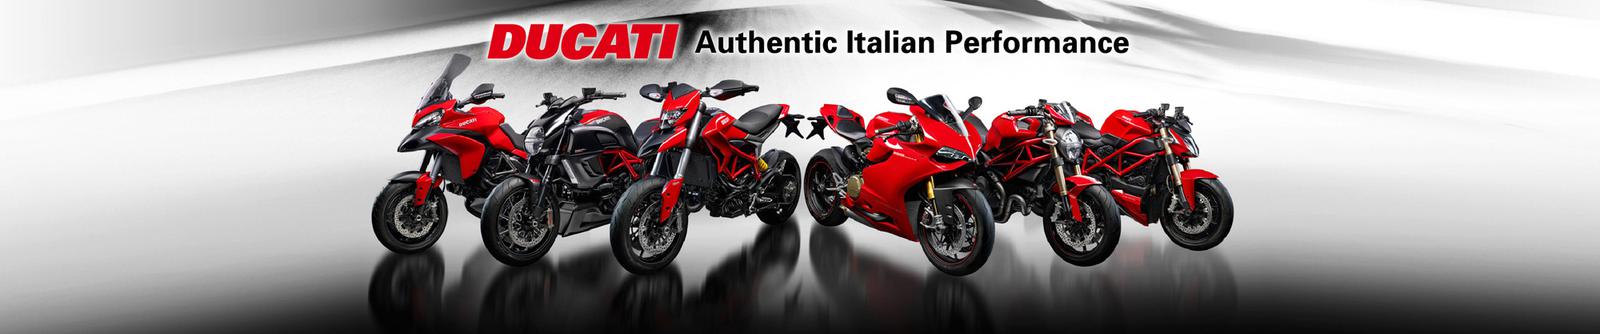 Ducati-NC-VTwins-Web-Slider-Banner-1-July13-01